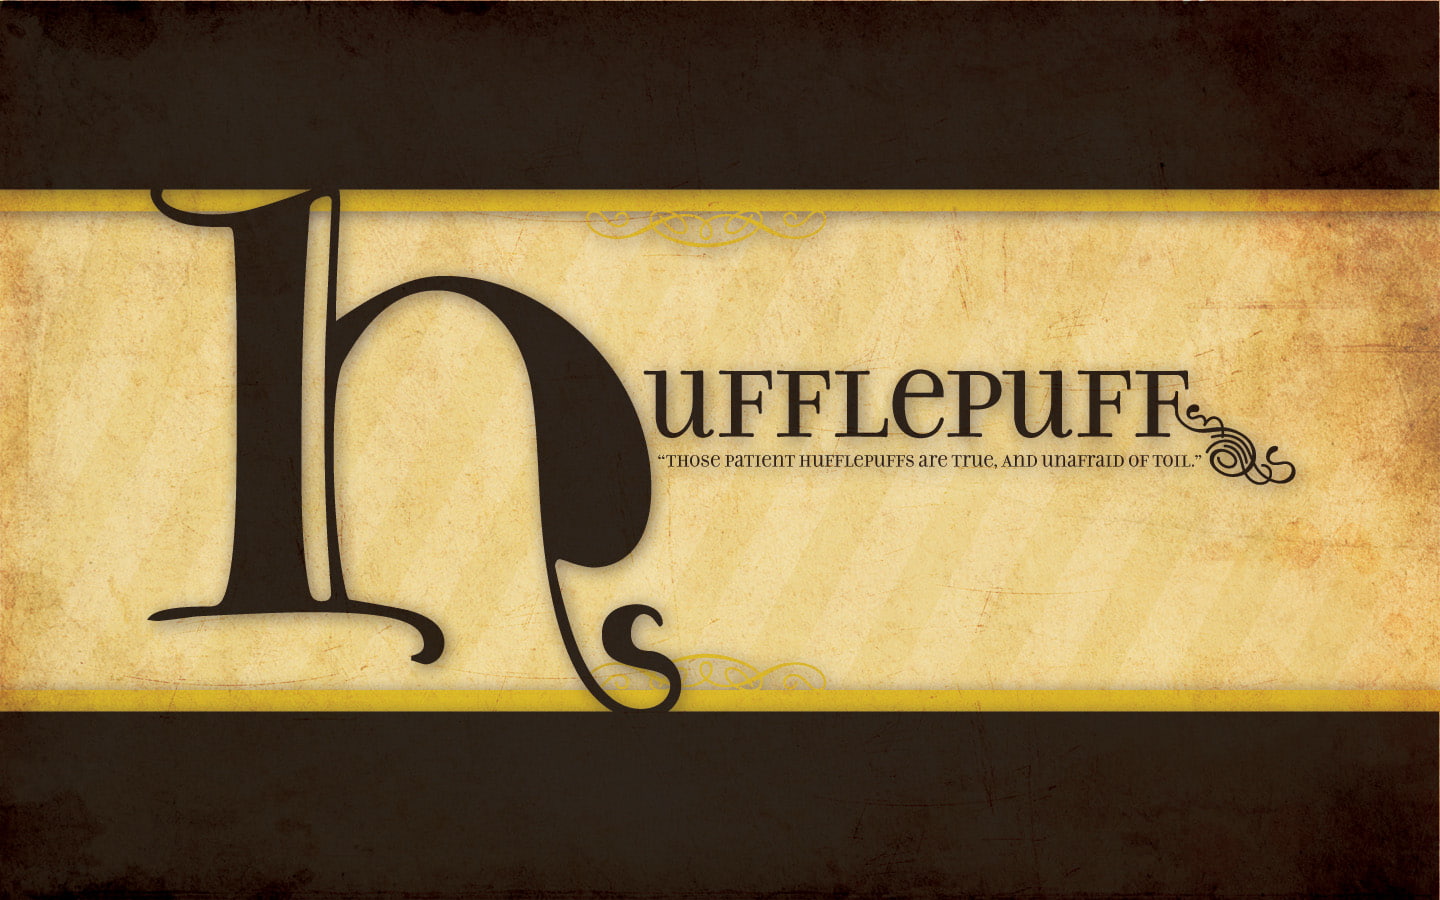 Harry Potter, Hufflepuff